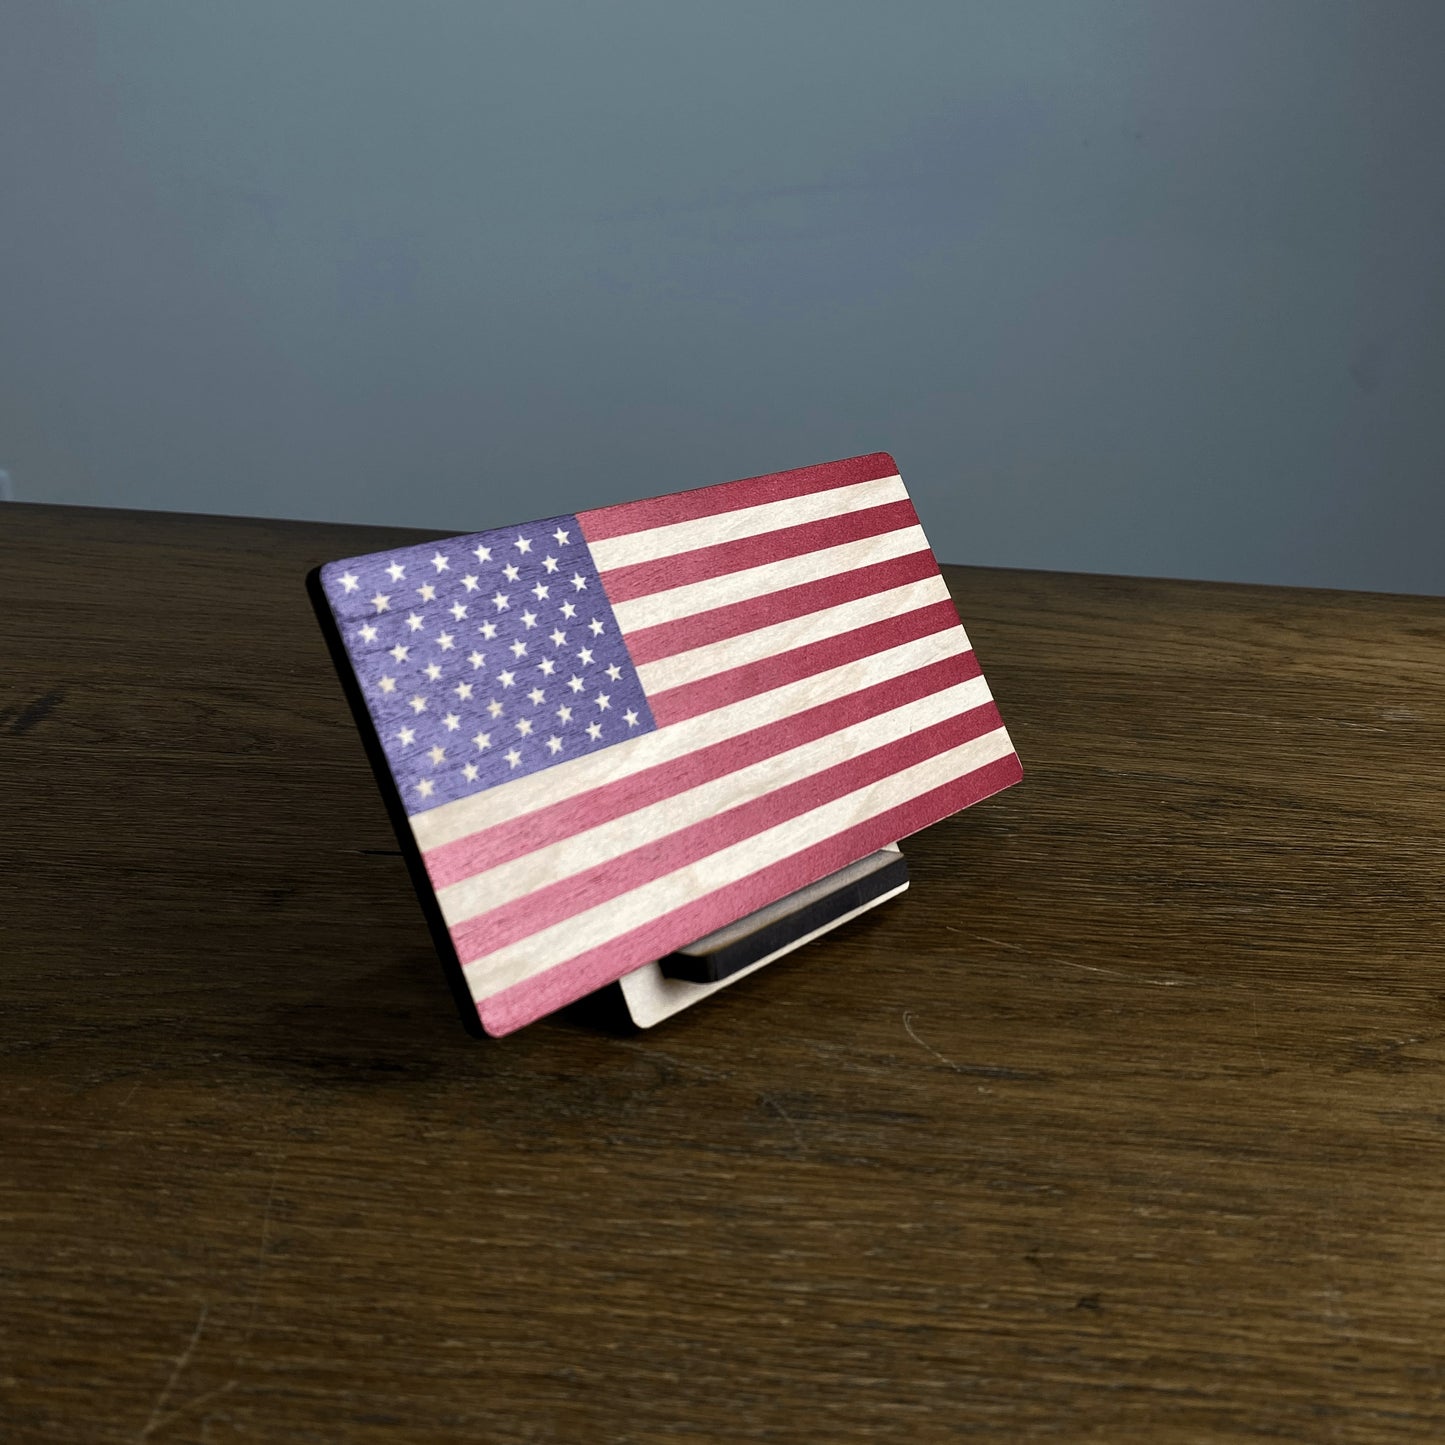 United States Wood Flag Print